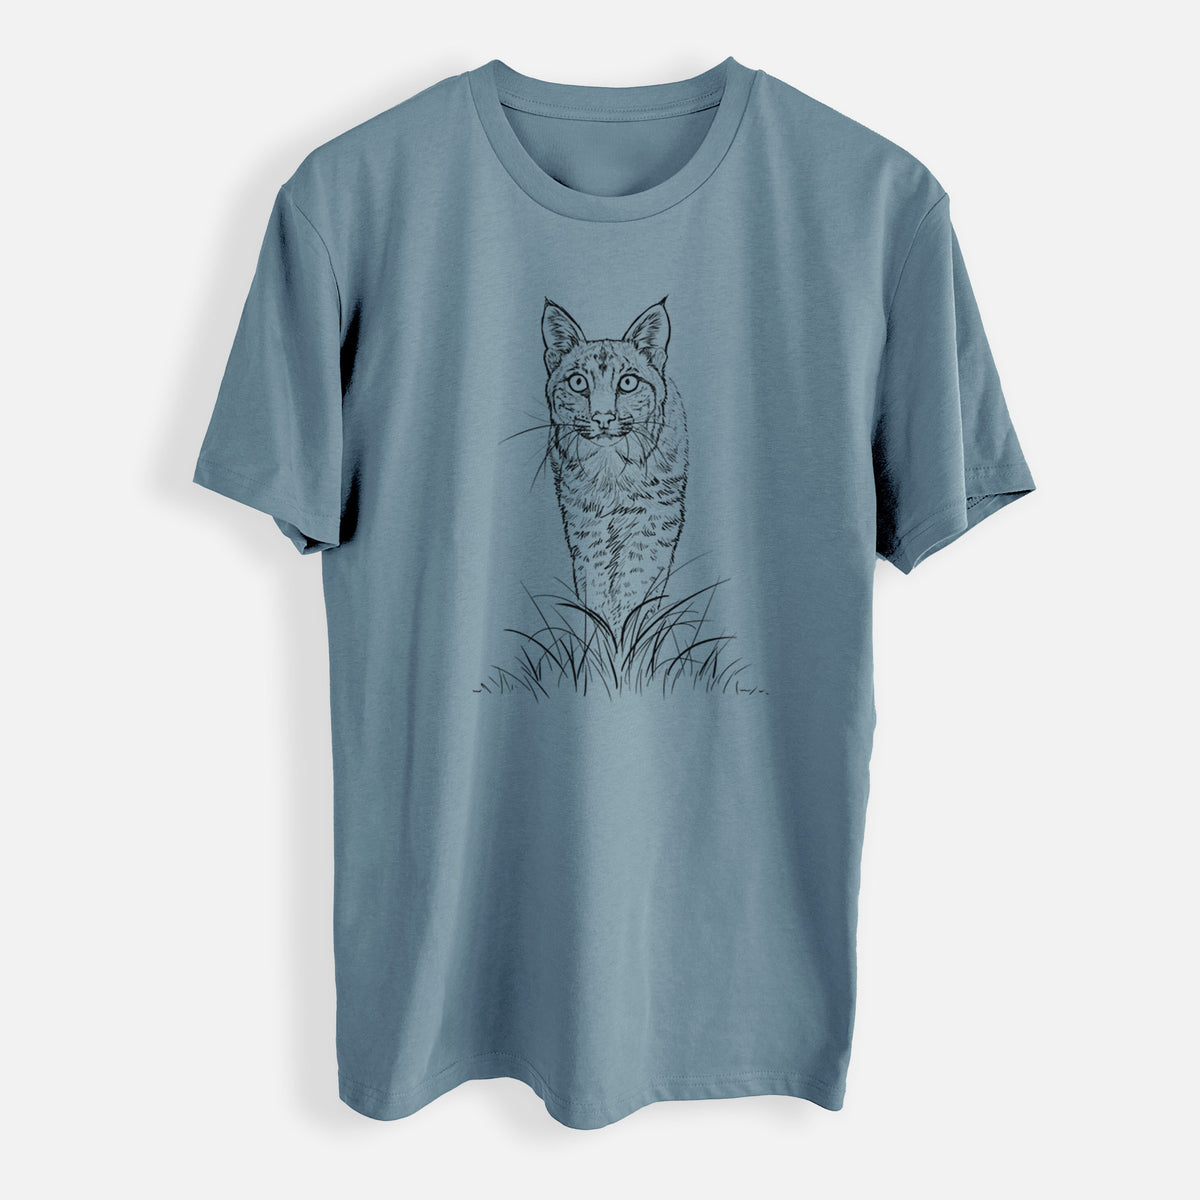 Bobcat - Lynx rufus - Mens Everyday Staple Tee